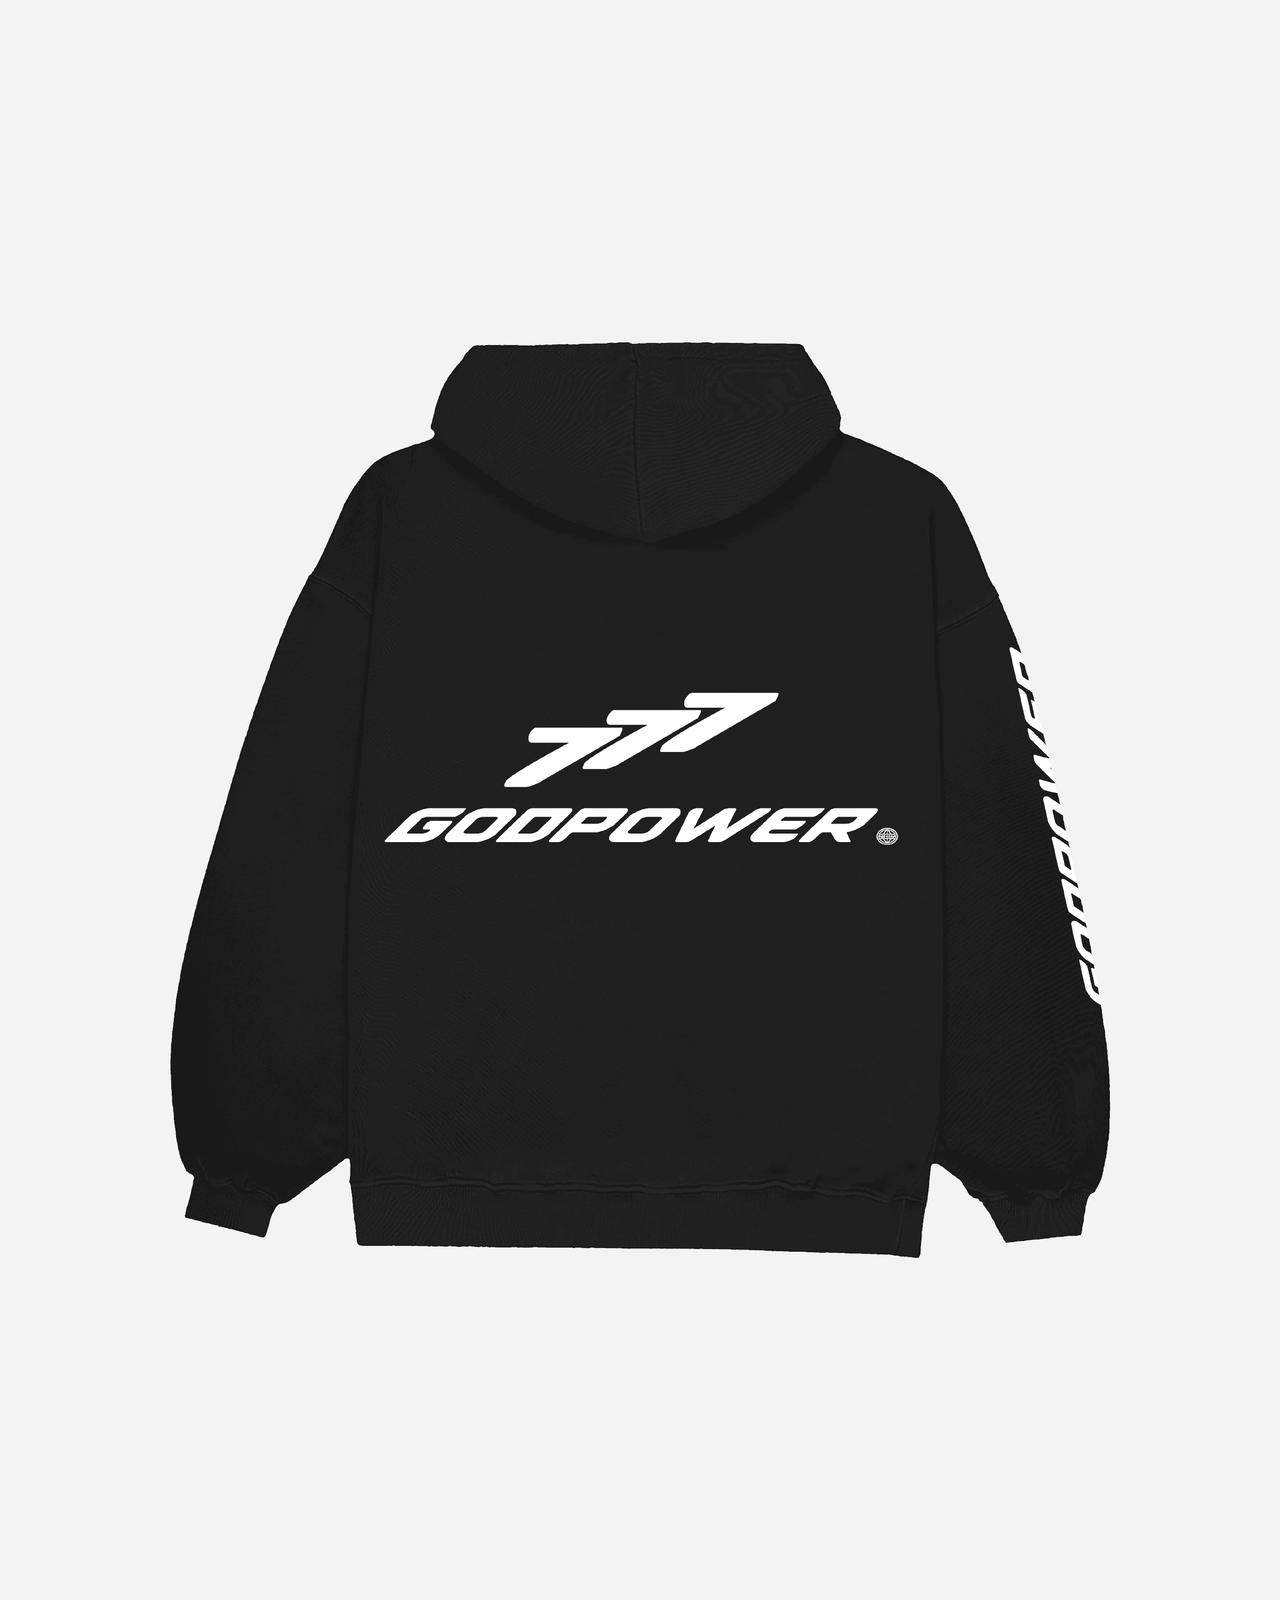 GODPOWER black hoodie christian sweatshirt by NHIM Apparel Christian clothing brand